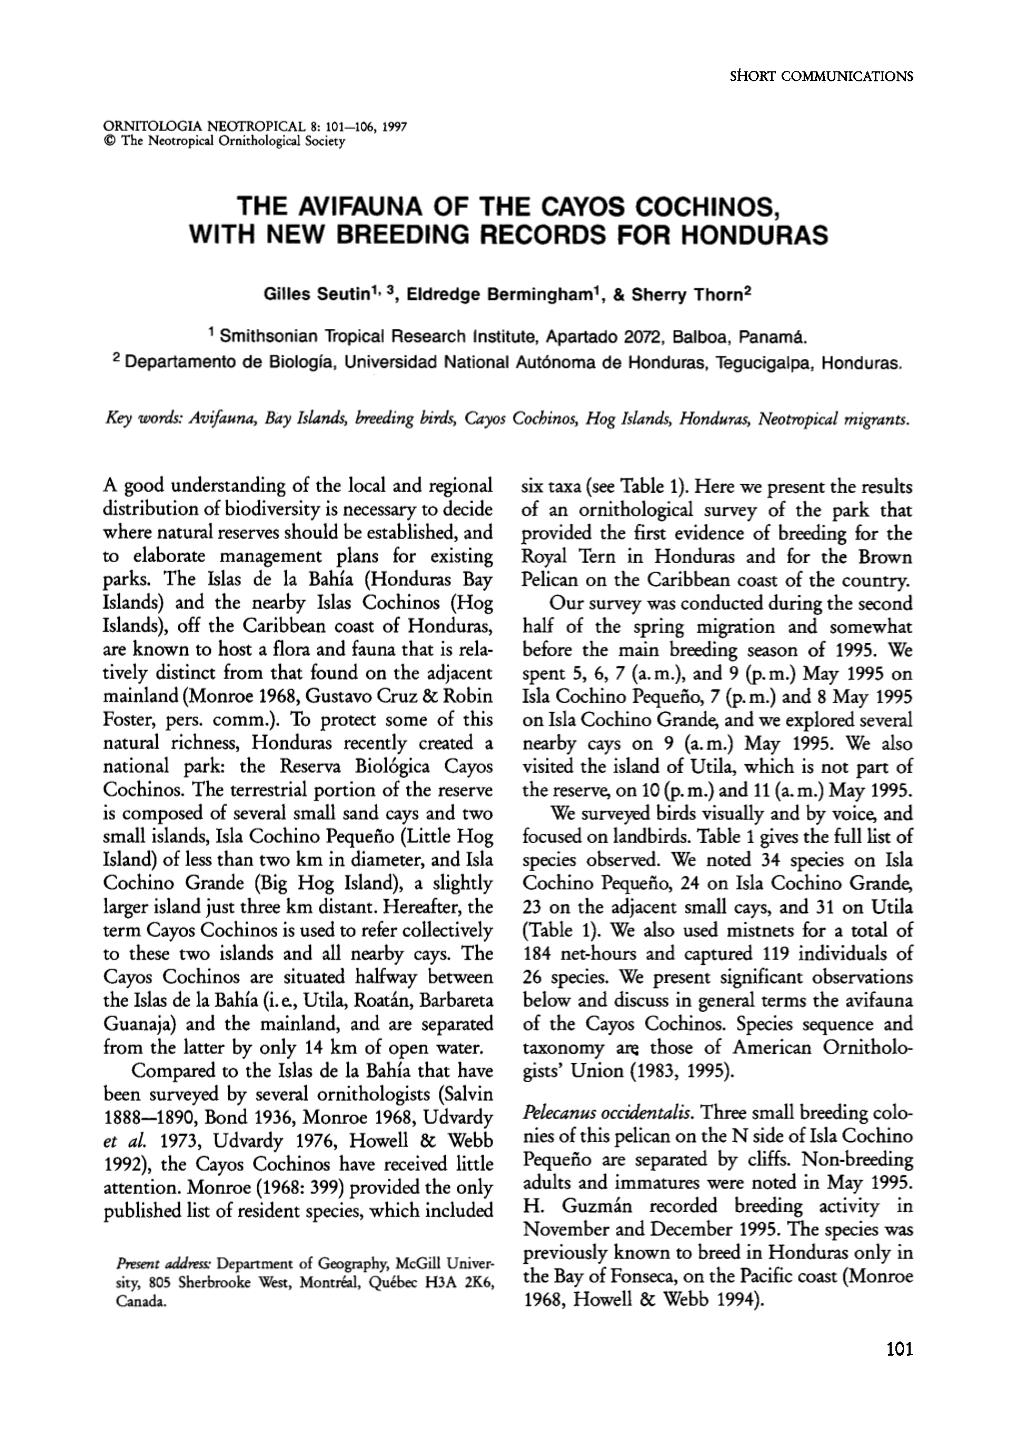 The Avifauna of the Cayos Cochinos, with New Breeding Records for Honduras